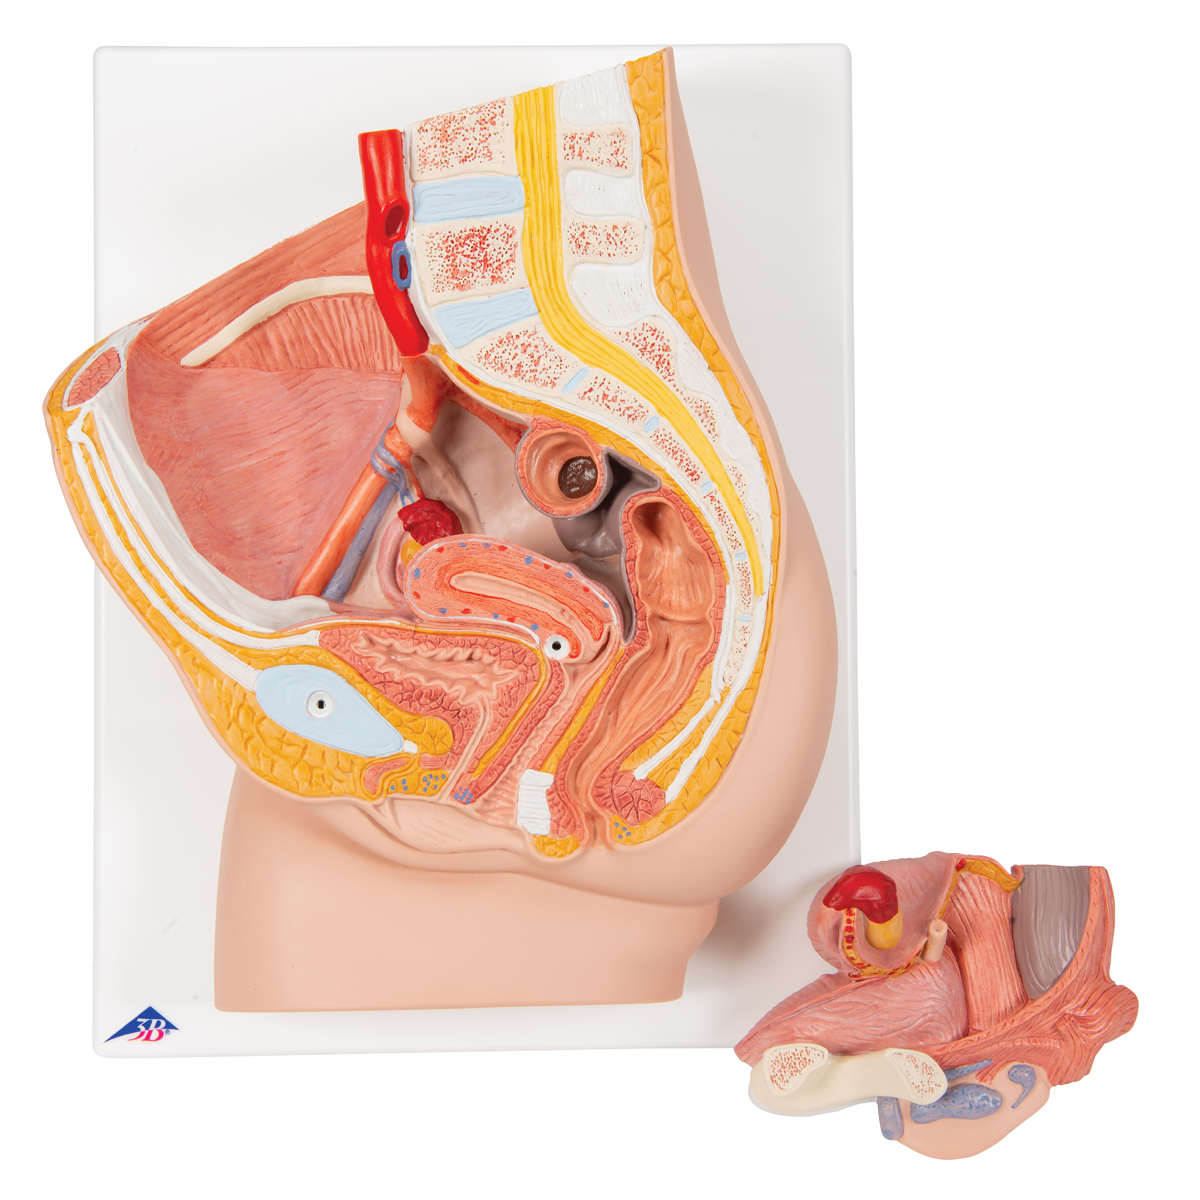 anatomical teaching models plastic human pelvic models female pelvic model with genital organs